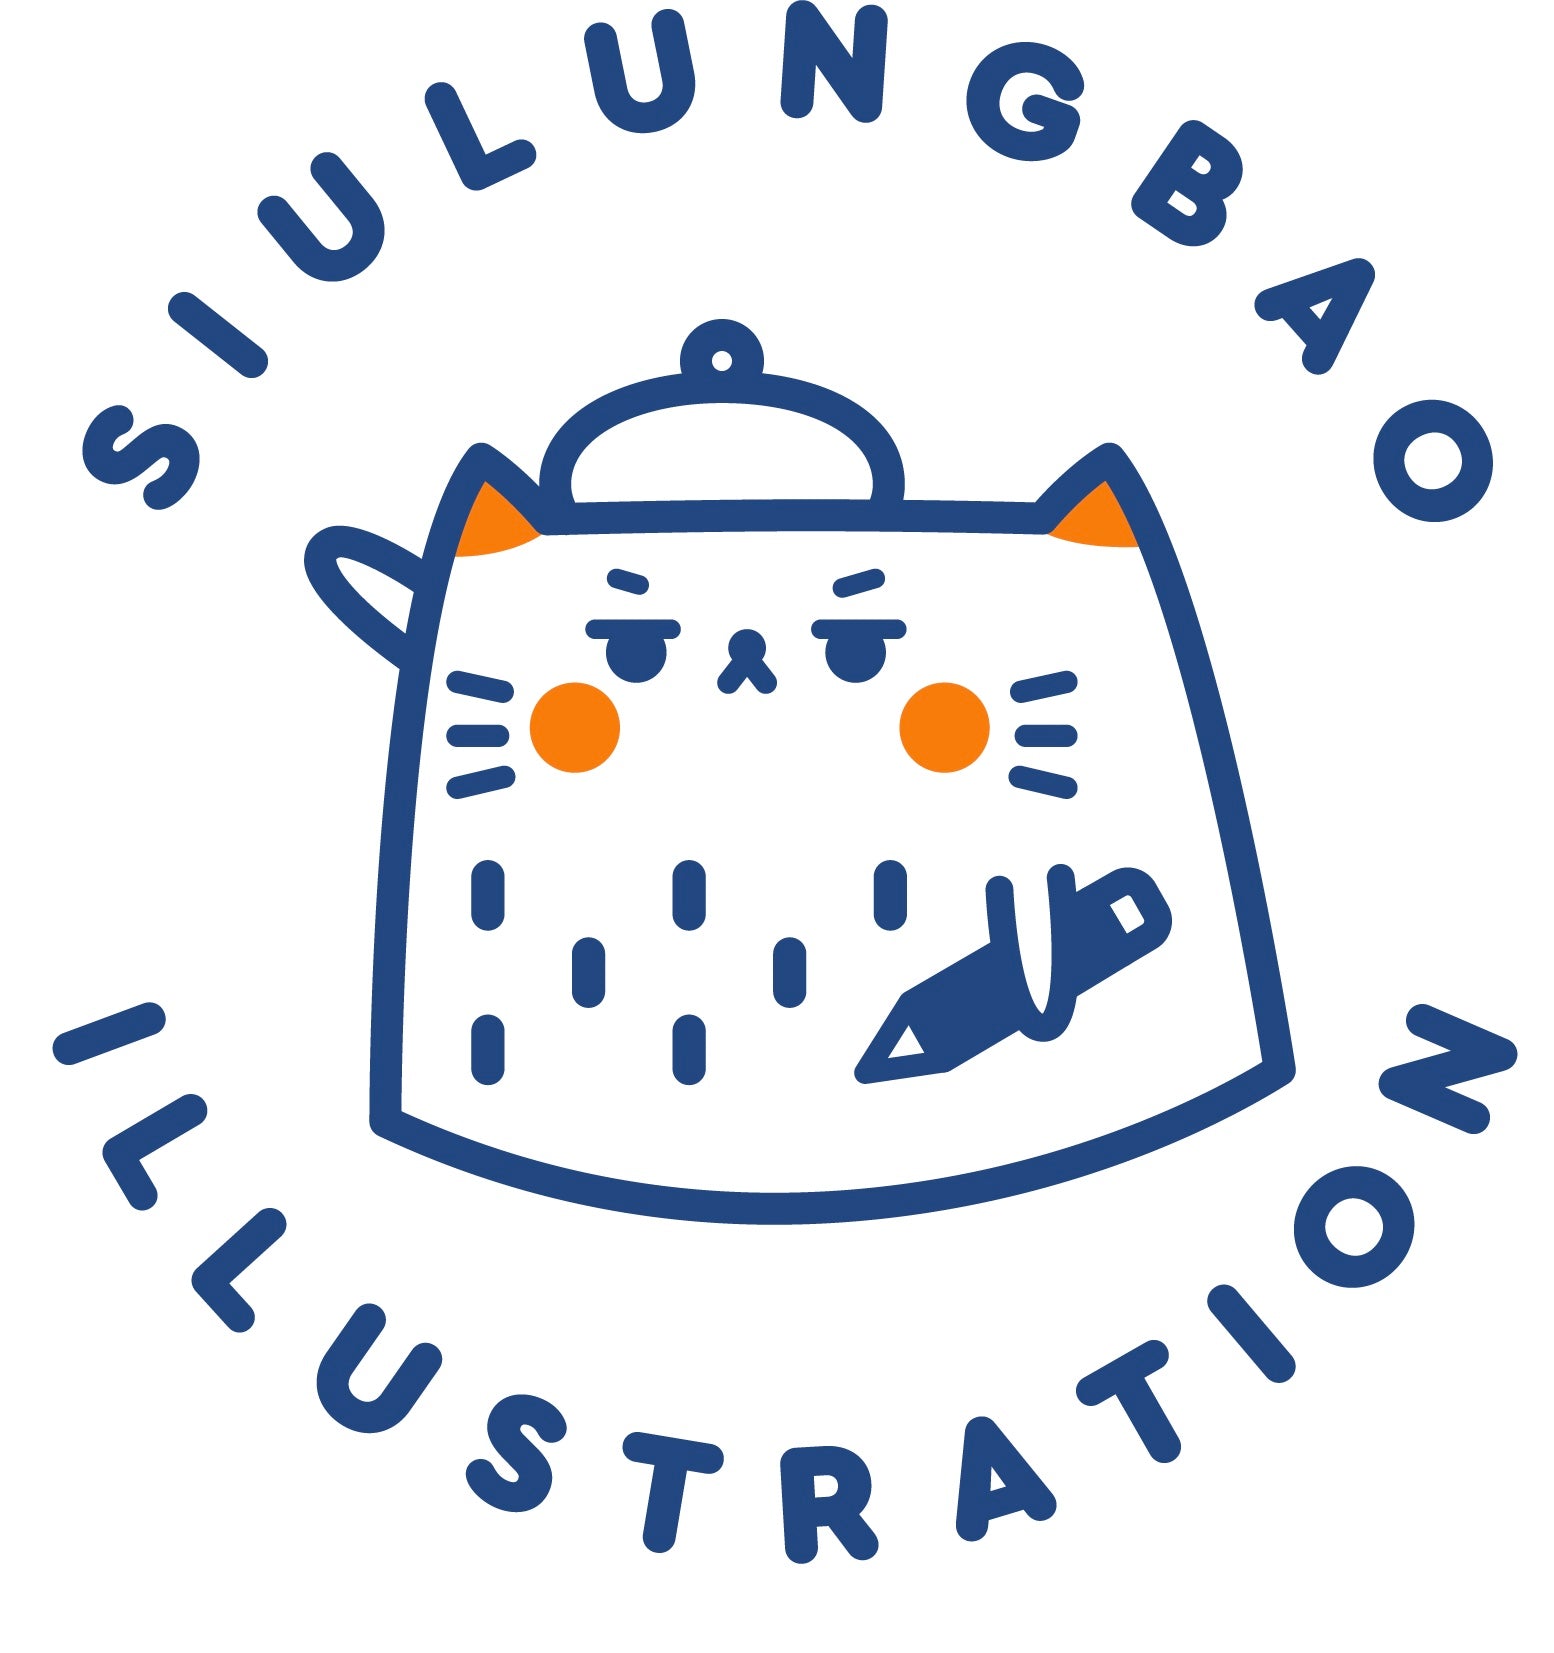 SIULUNGBAO ILLUSTRATION